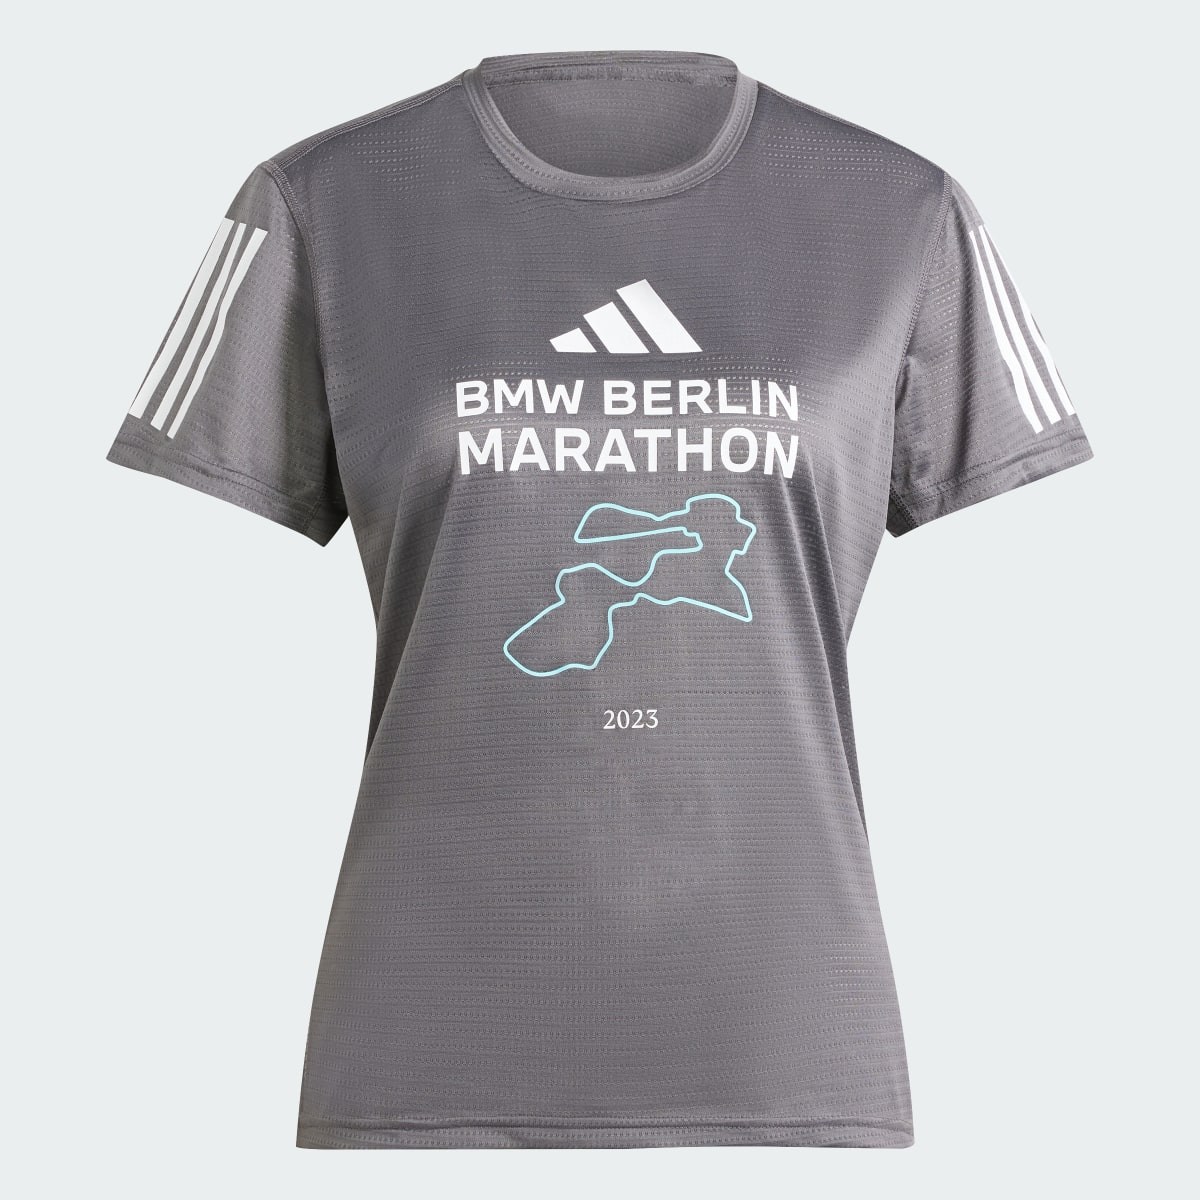 Adidas T-shirt Event da BMW BERLIN-MARATHON 2023. 5